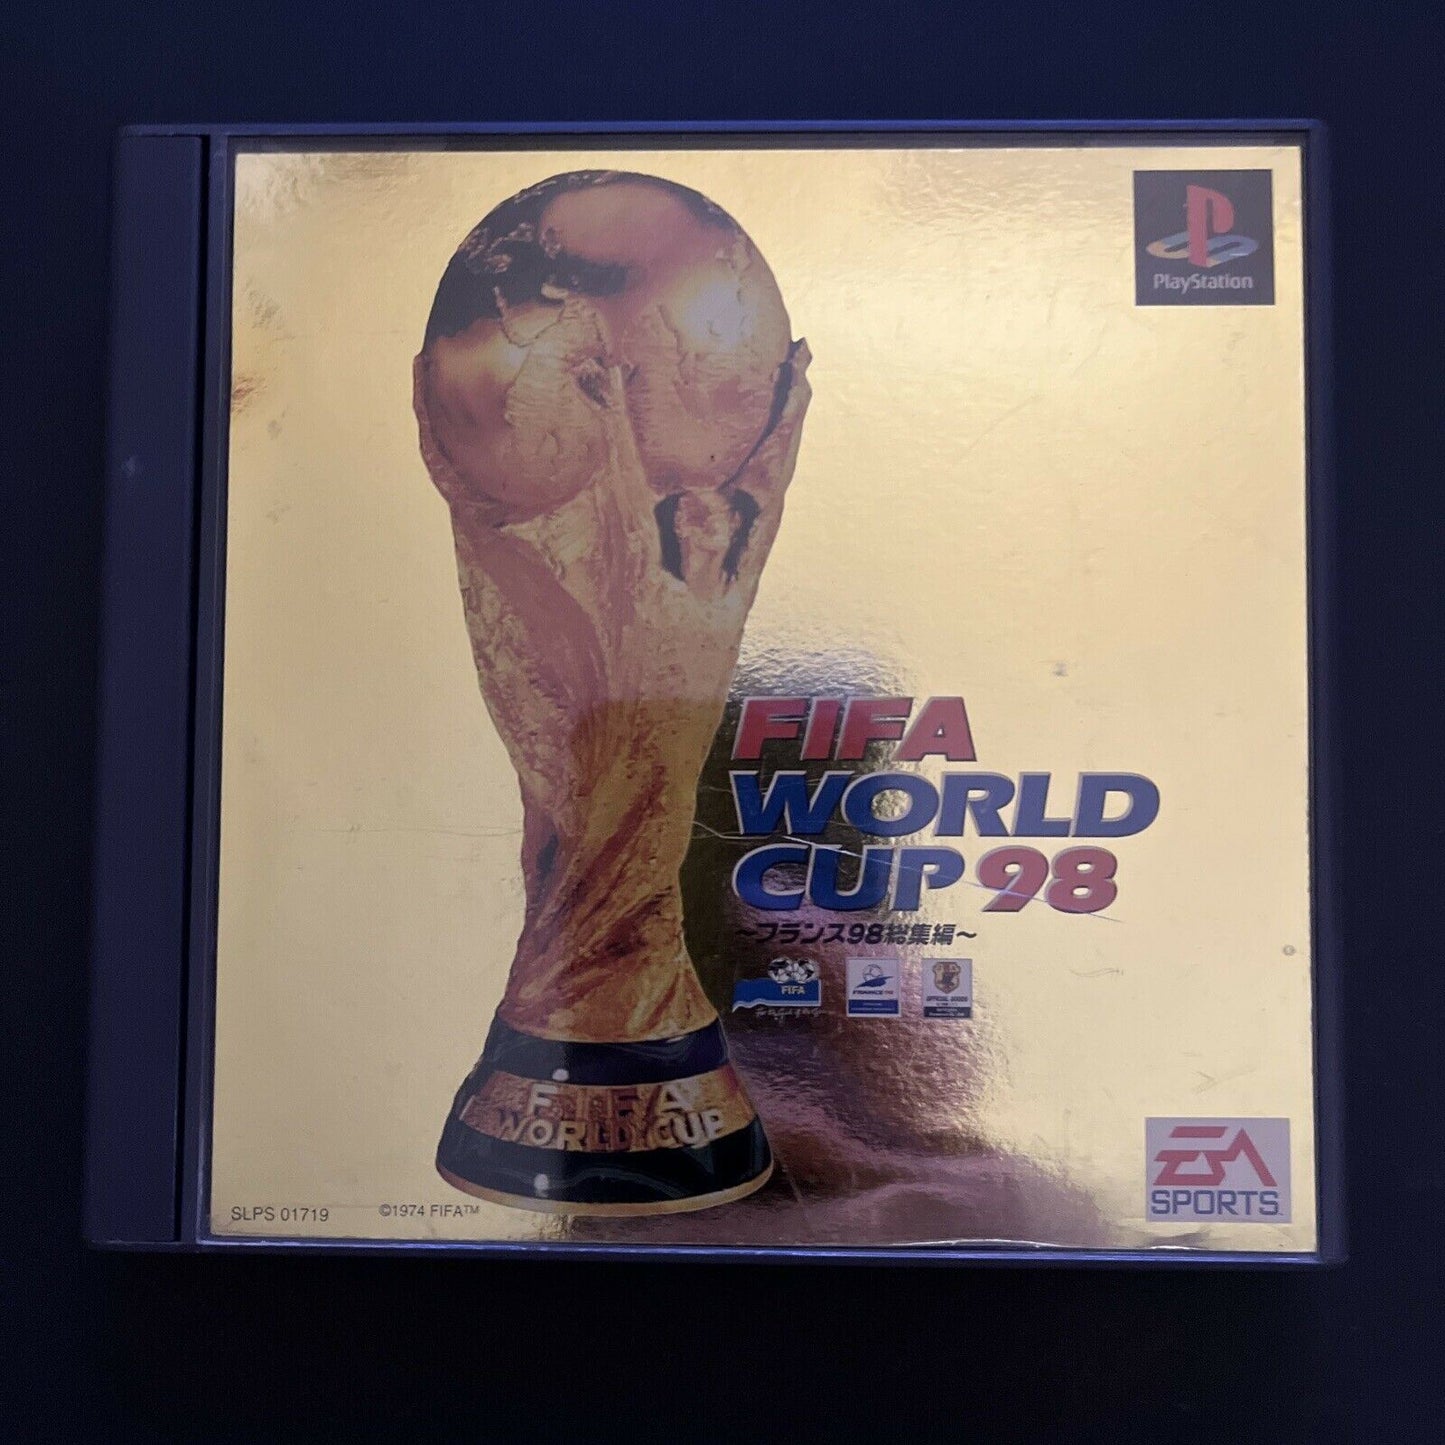 FIFA World Cup 98 - PlayStation PS1 NTSC-J Japan Soccer Game